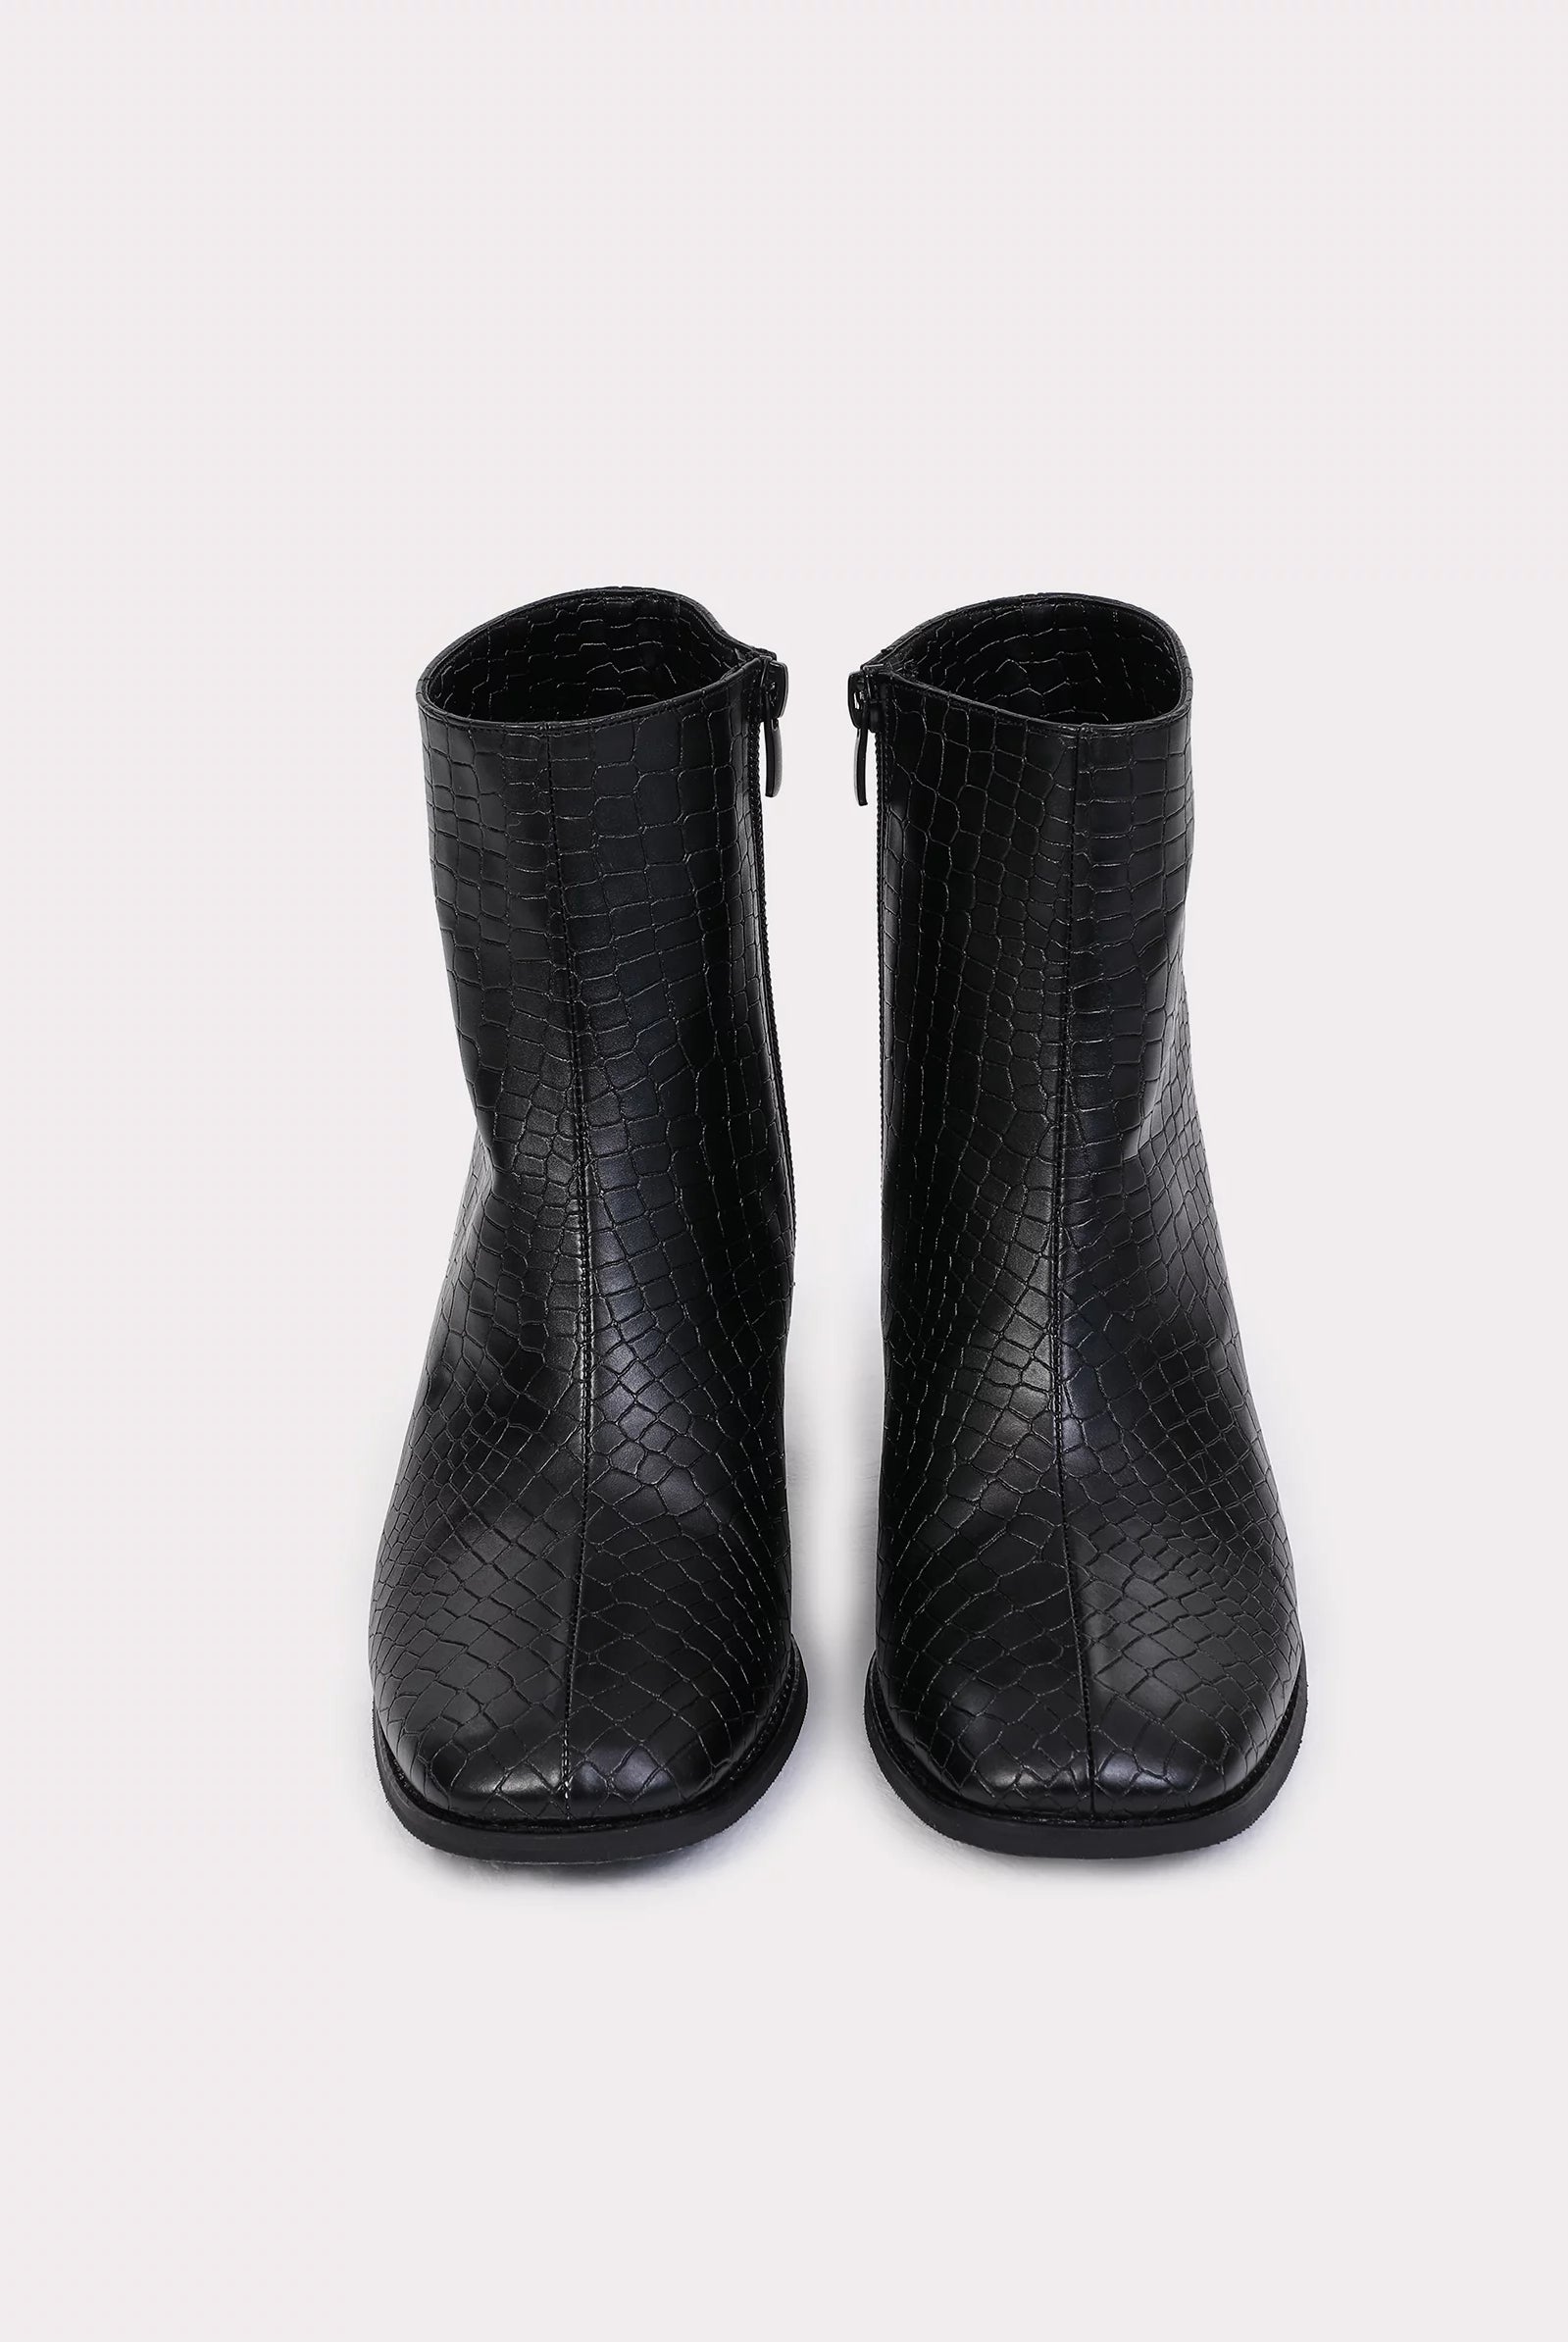 black crocs boots UK